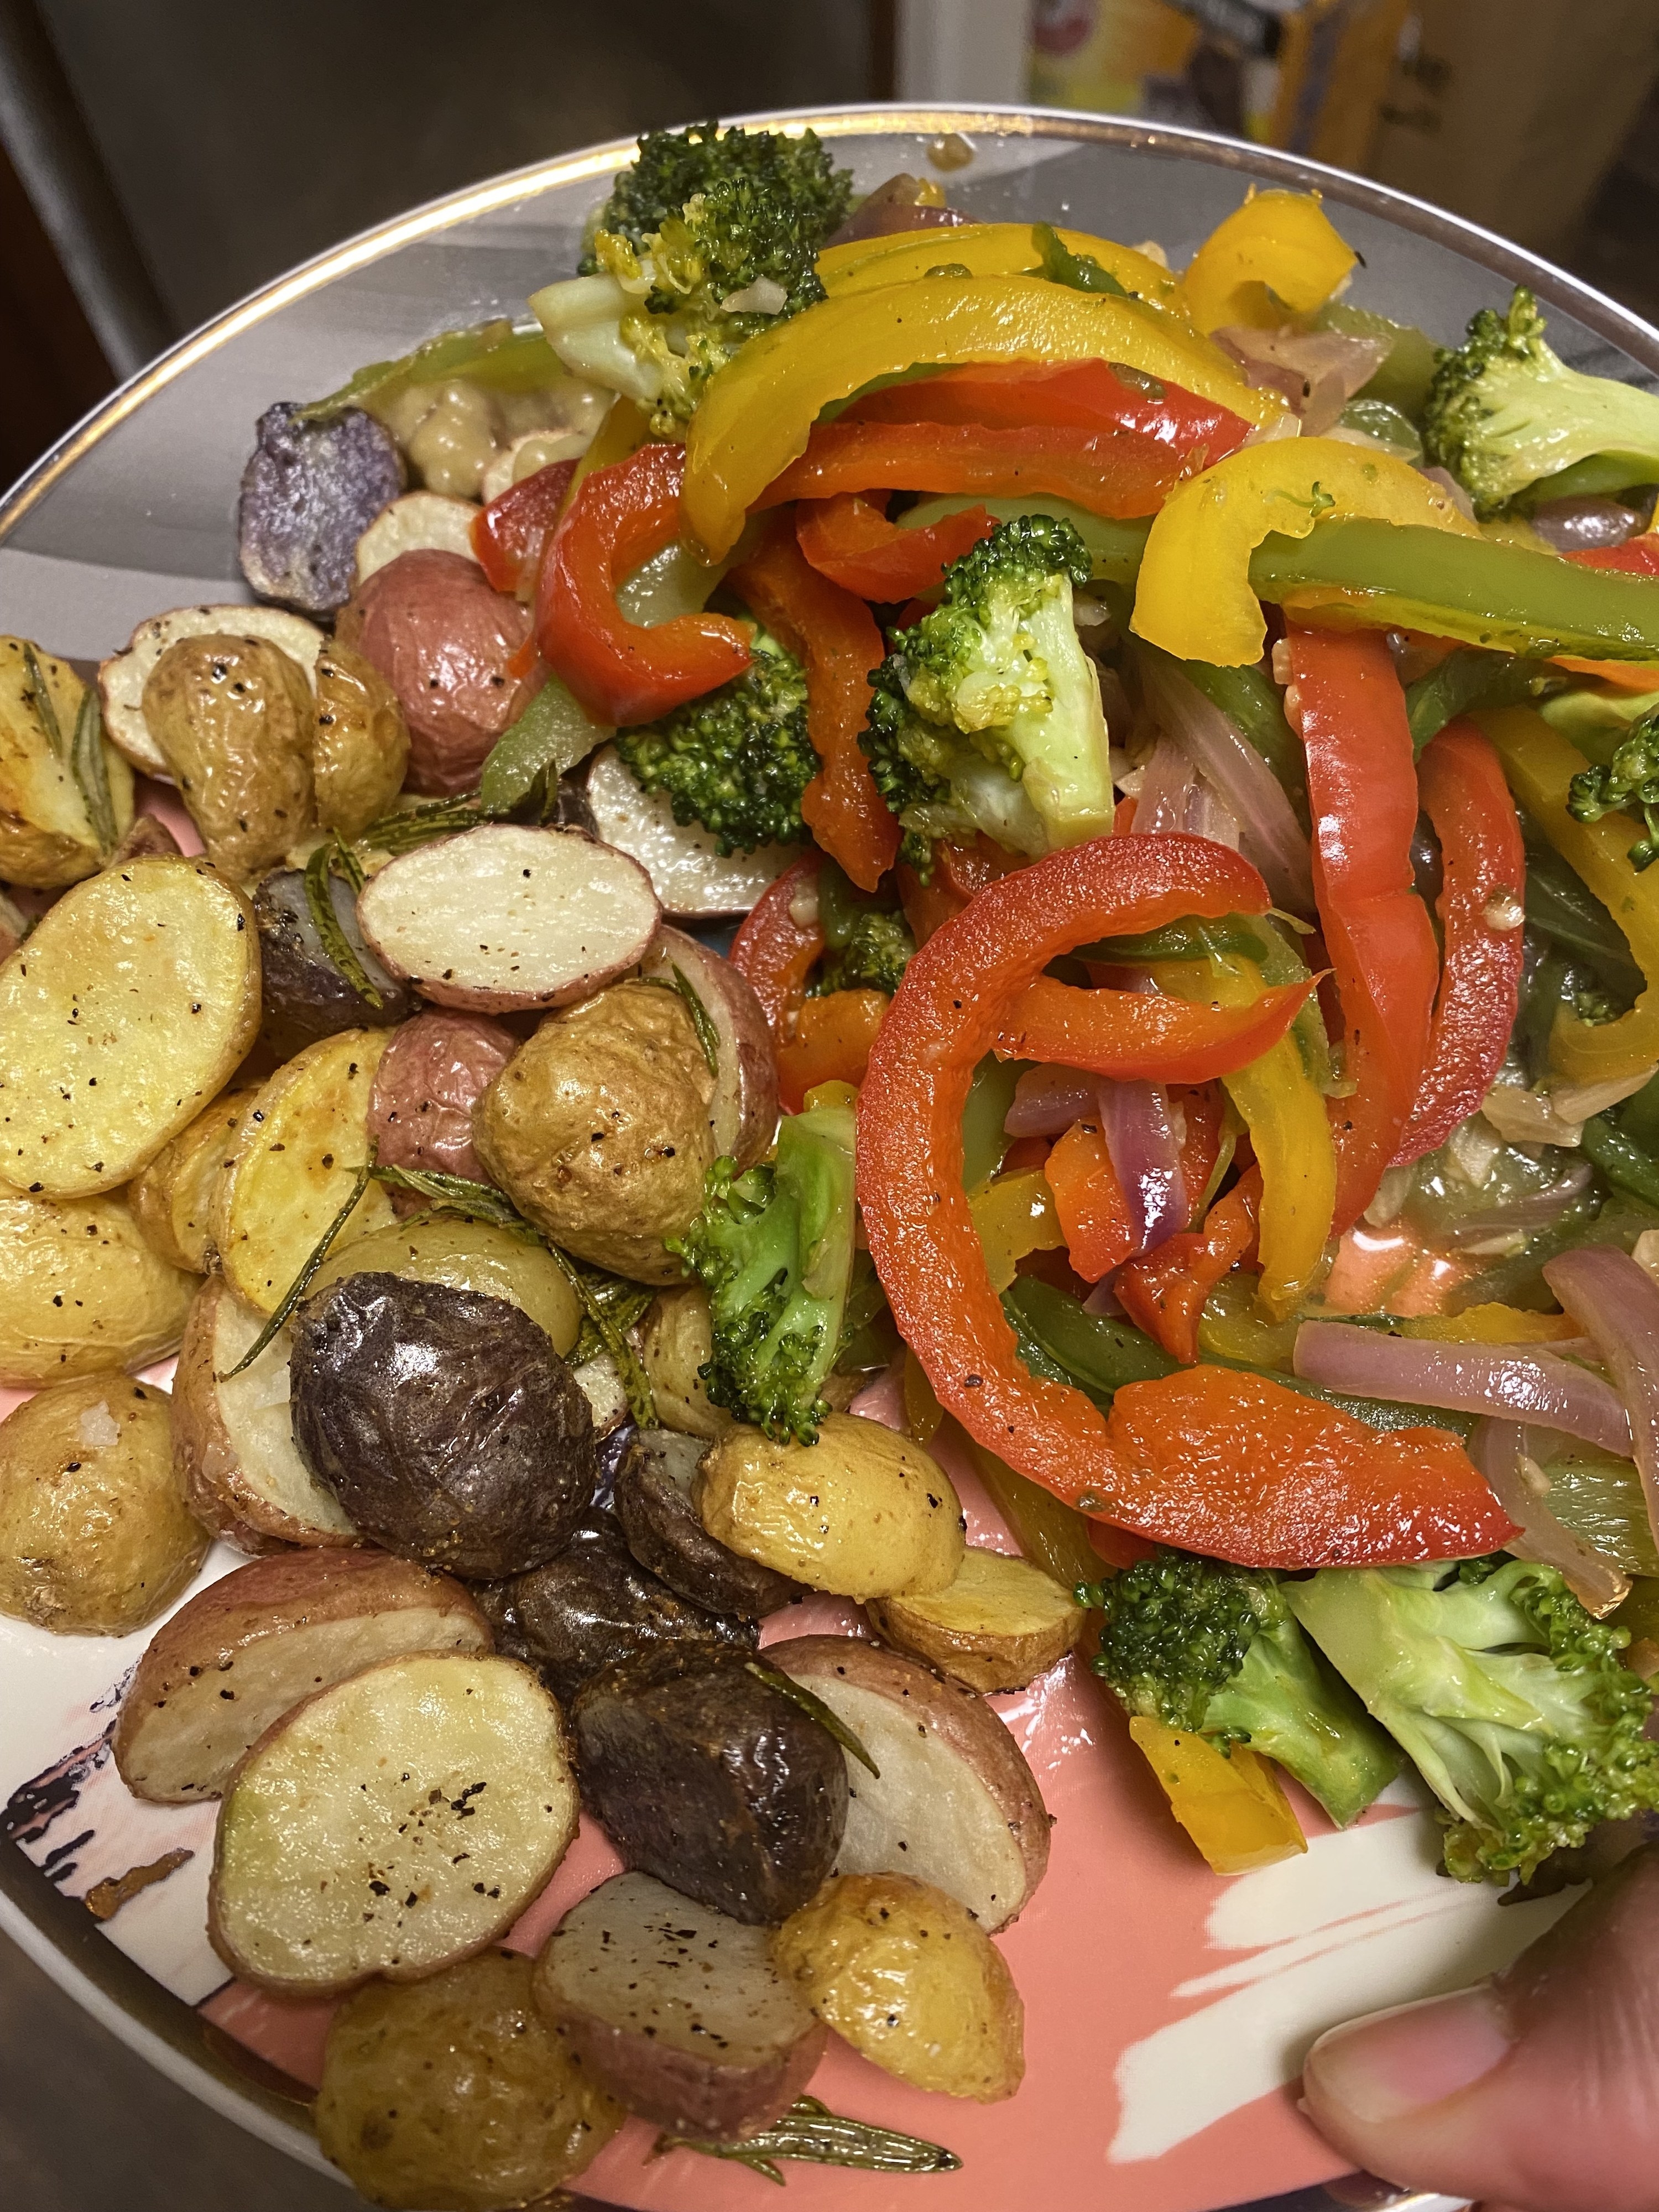 Stir-fried veggies and crispy potatoes